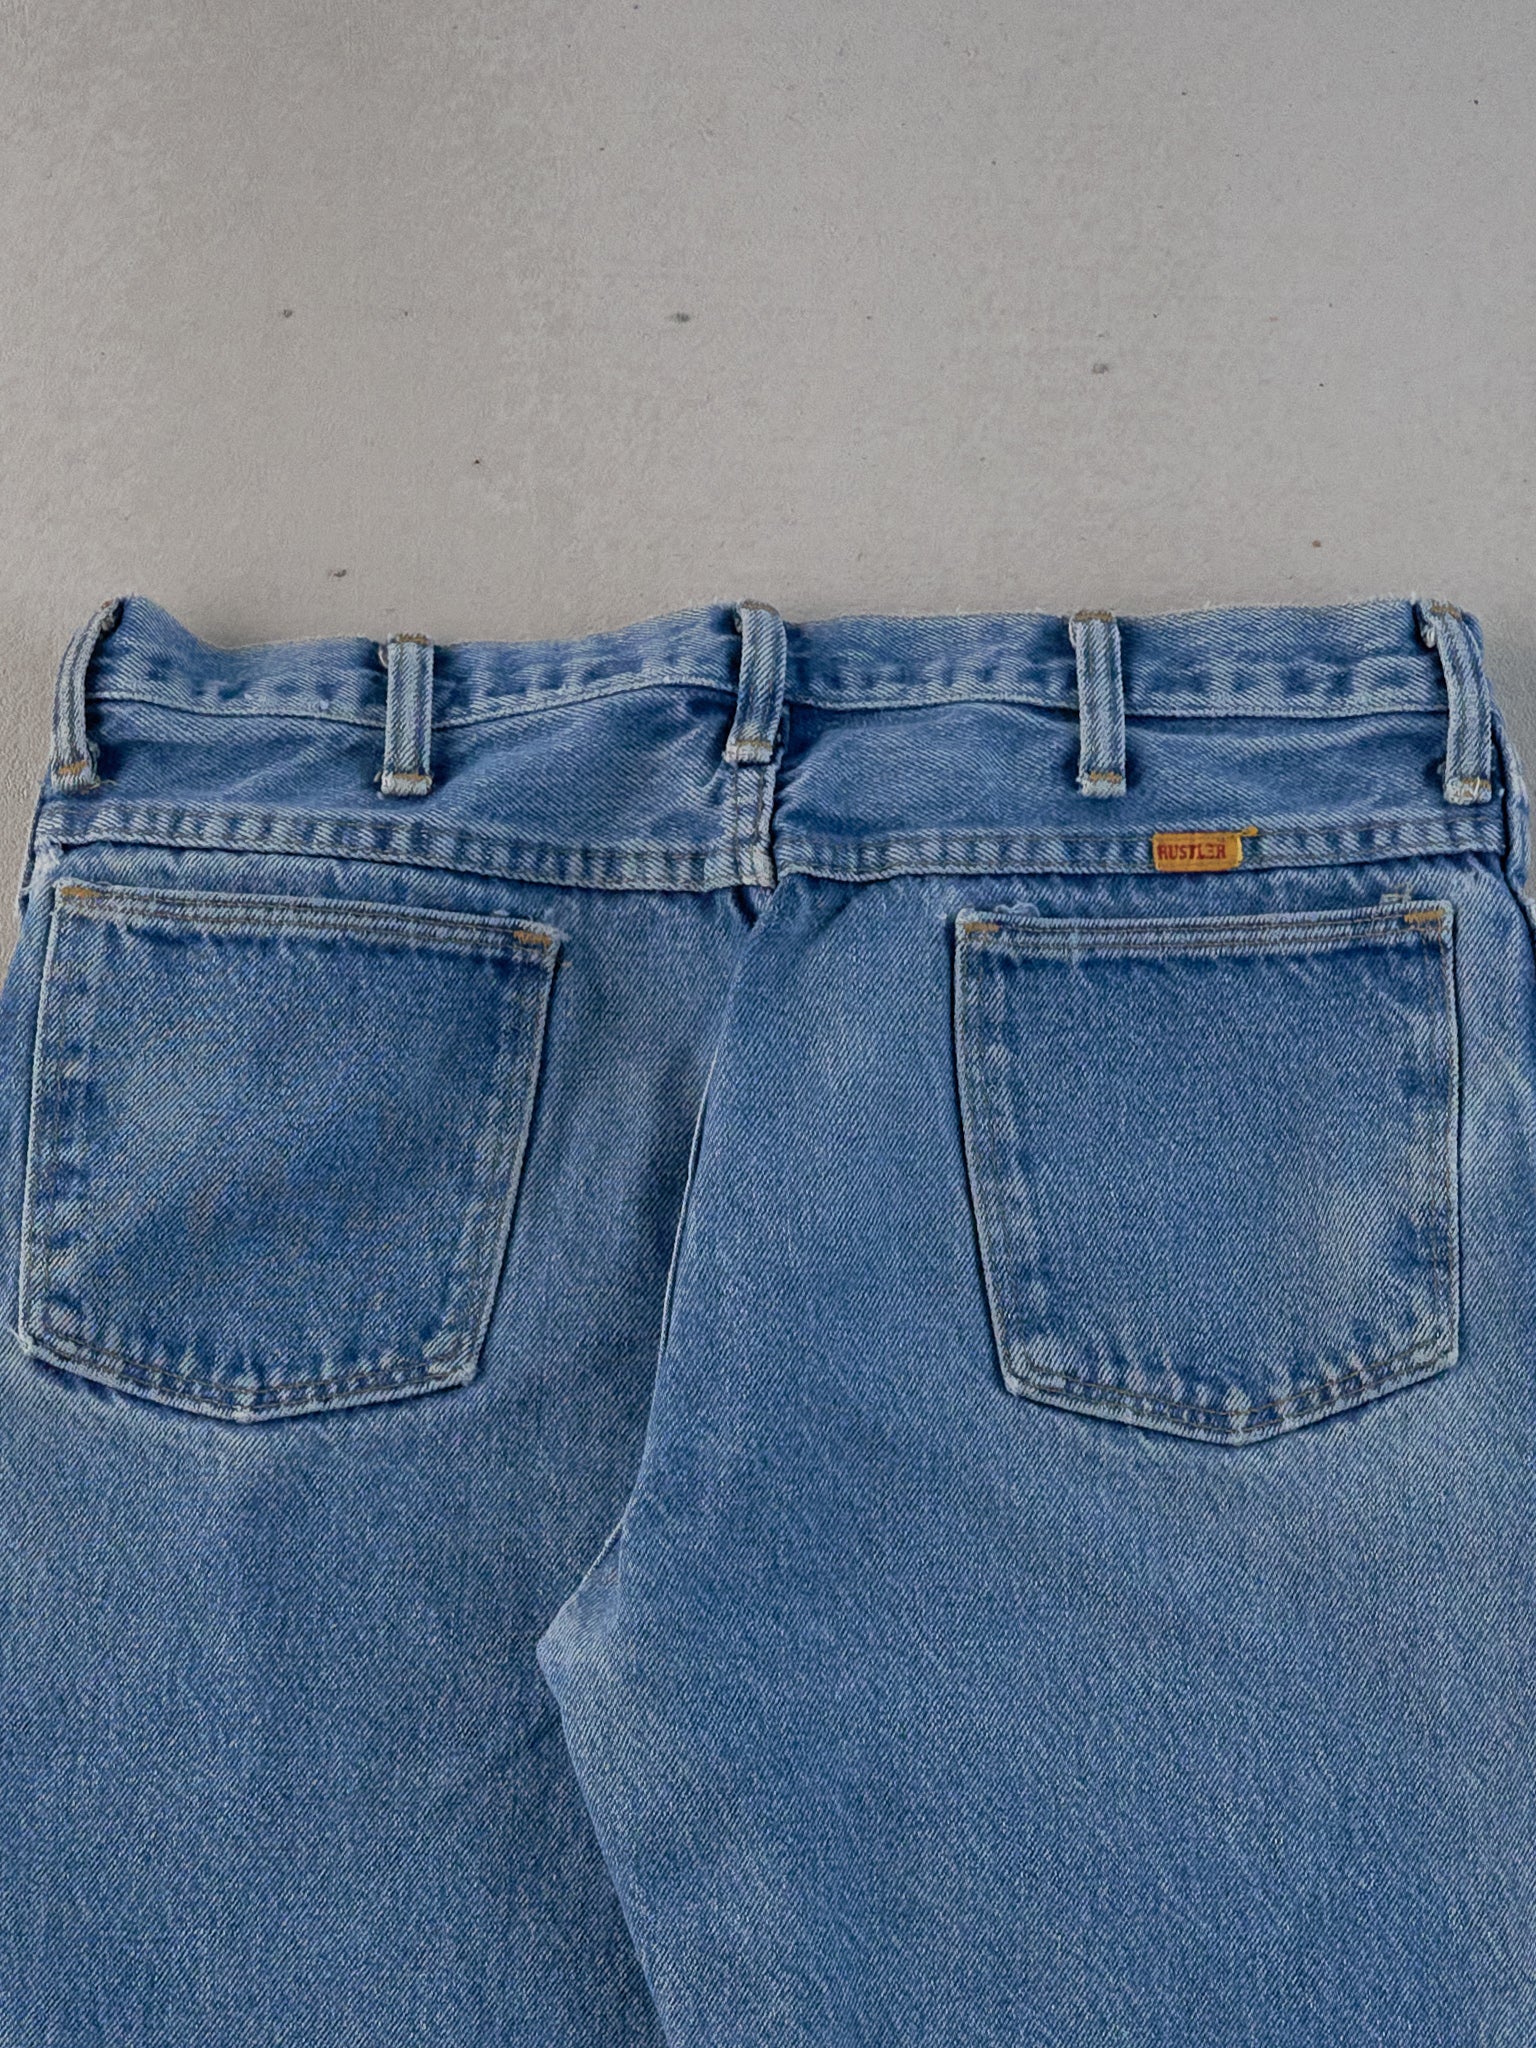 Vintage 70s Blue Rustler Denim Jeans (32x28)